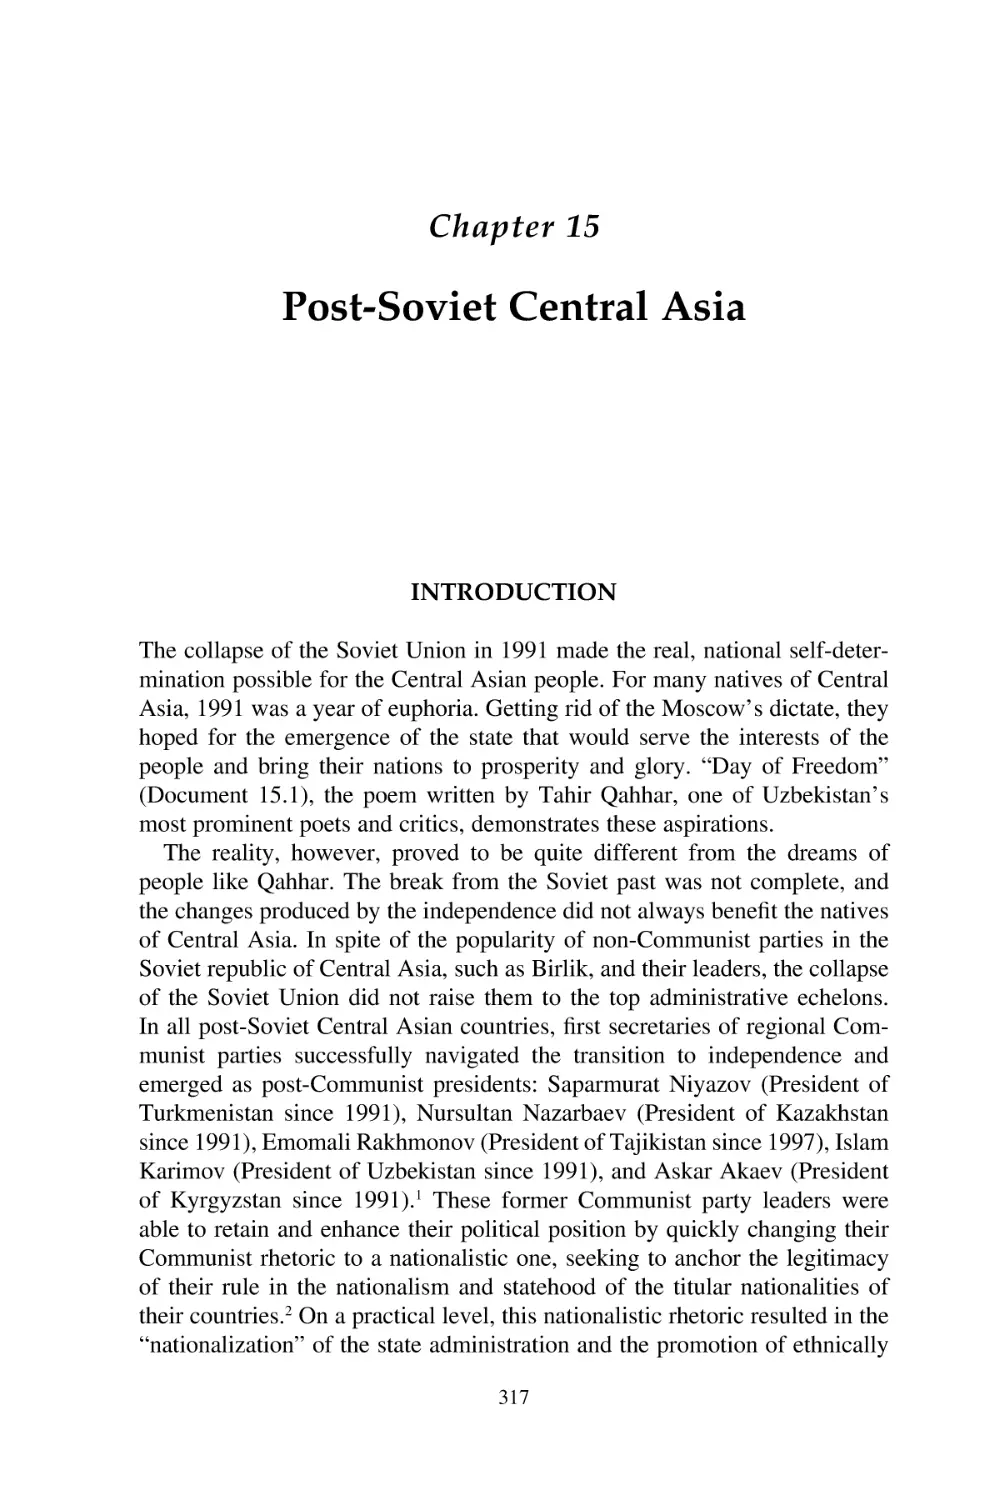 15. Post-Soviet Central Asia